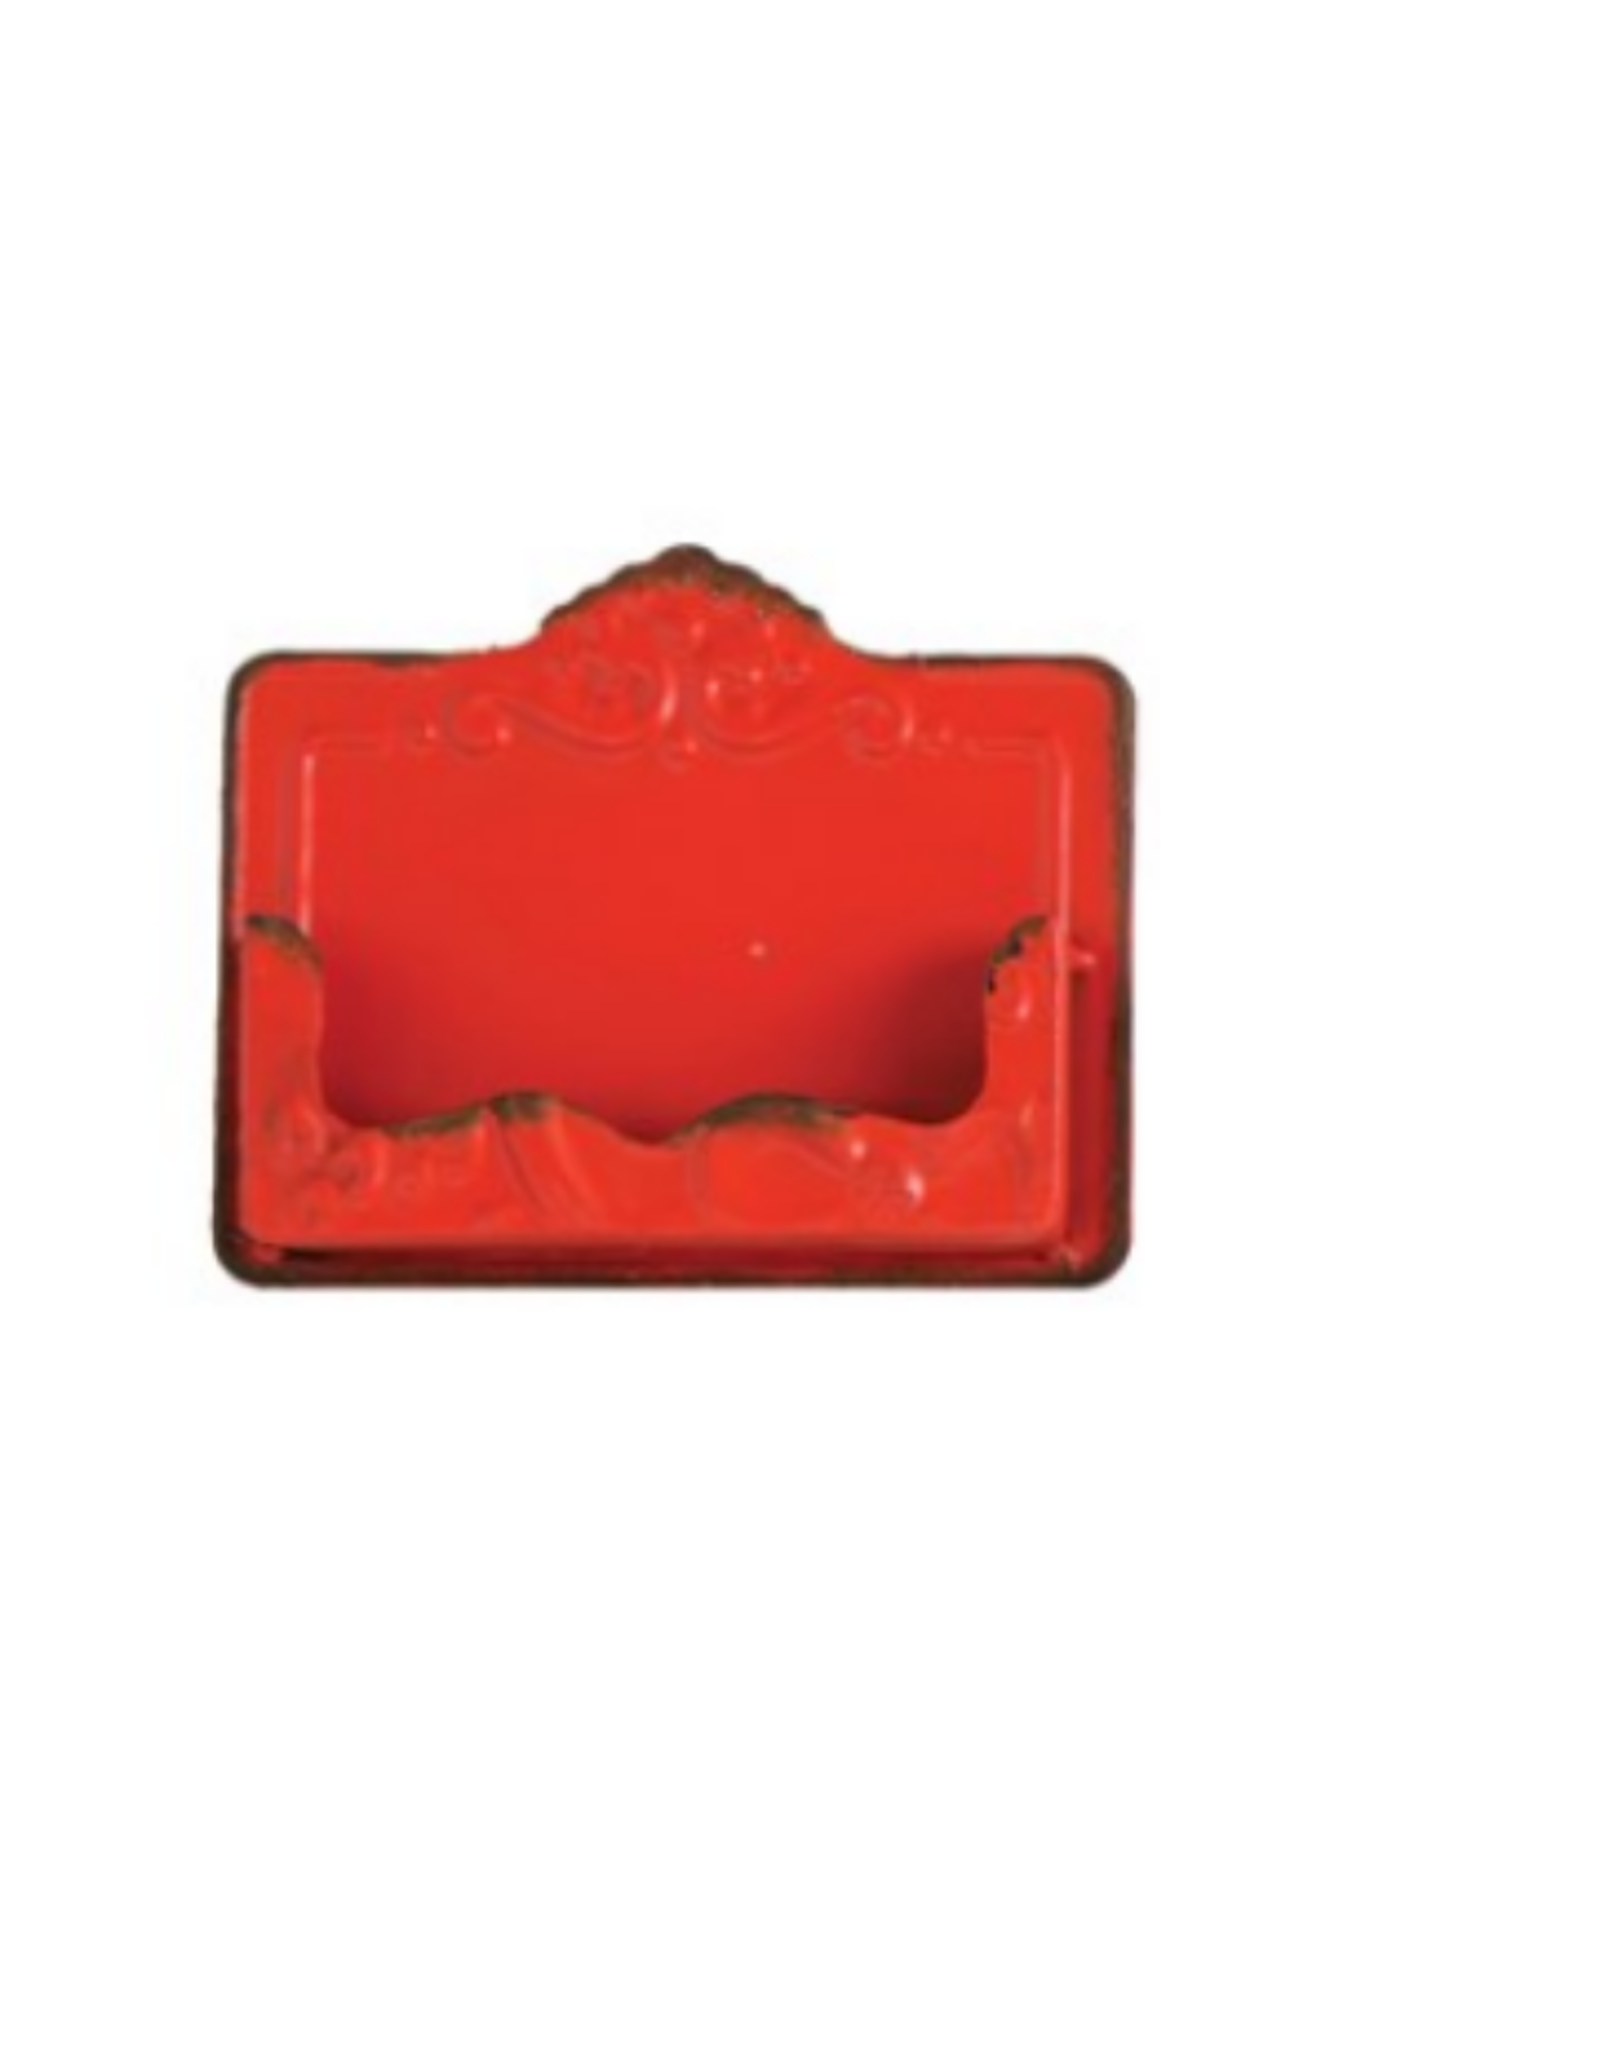 CARD HOLDER-METAL, 2-1/4x2-1/2